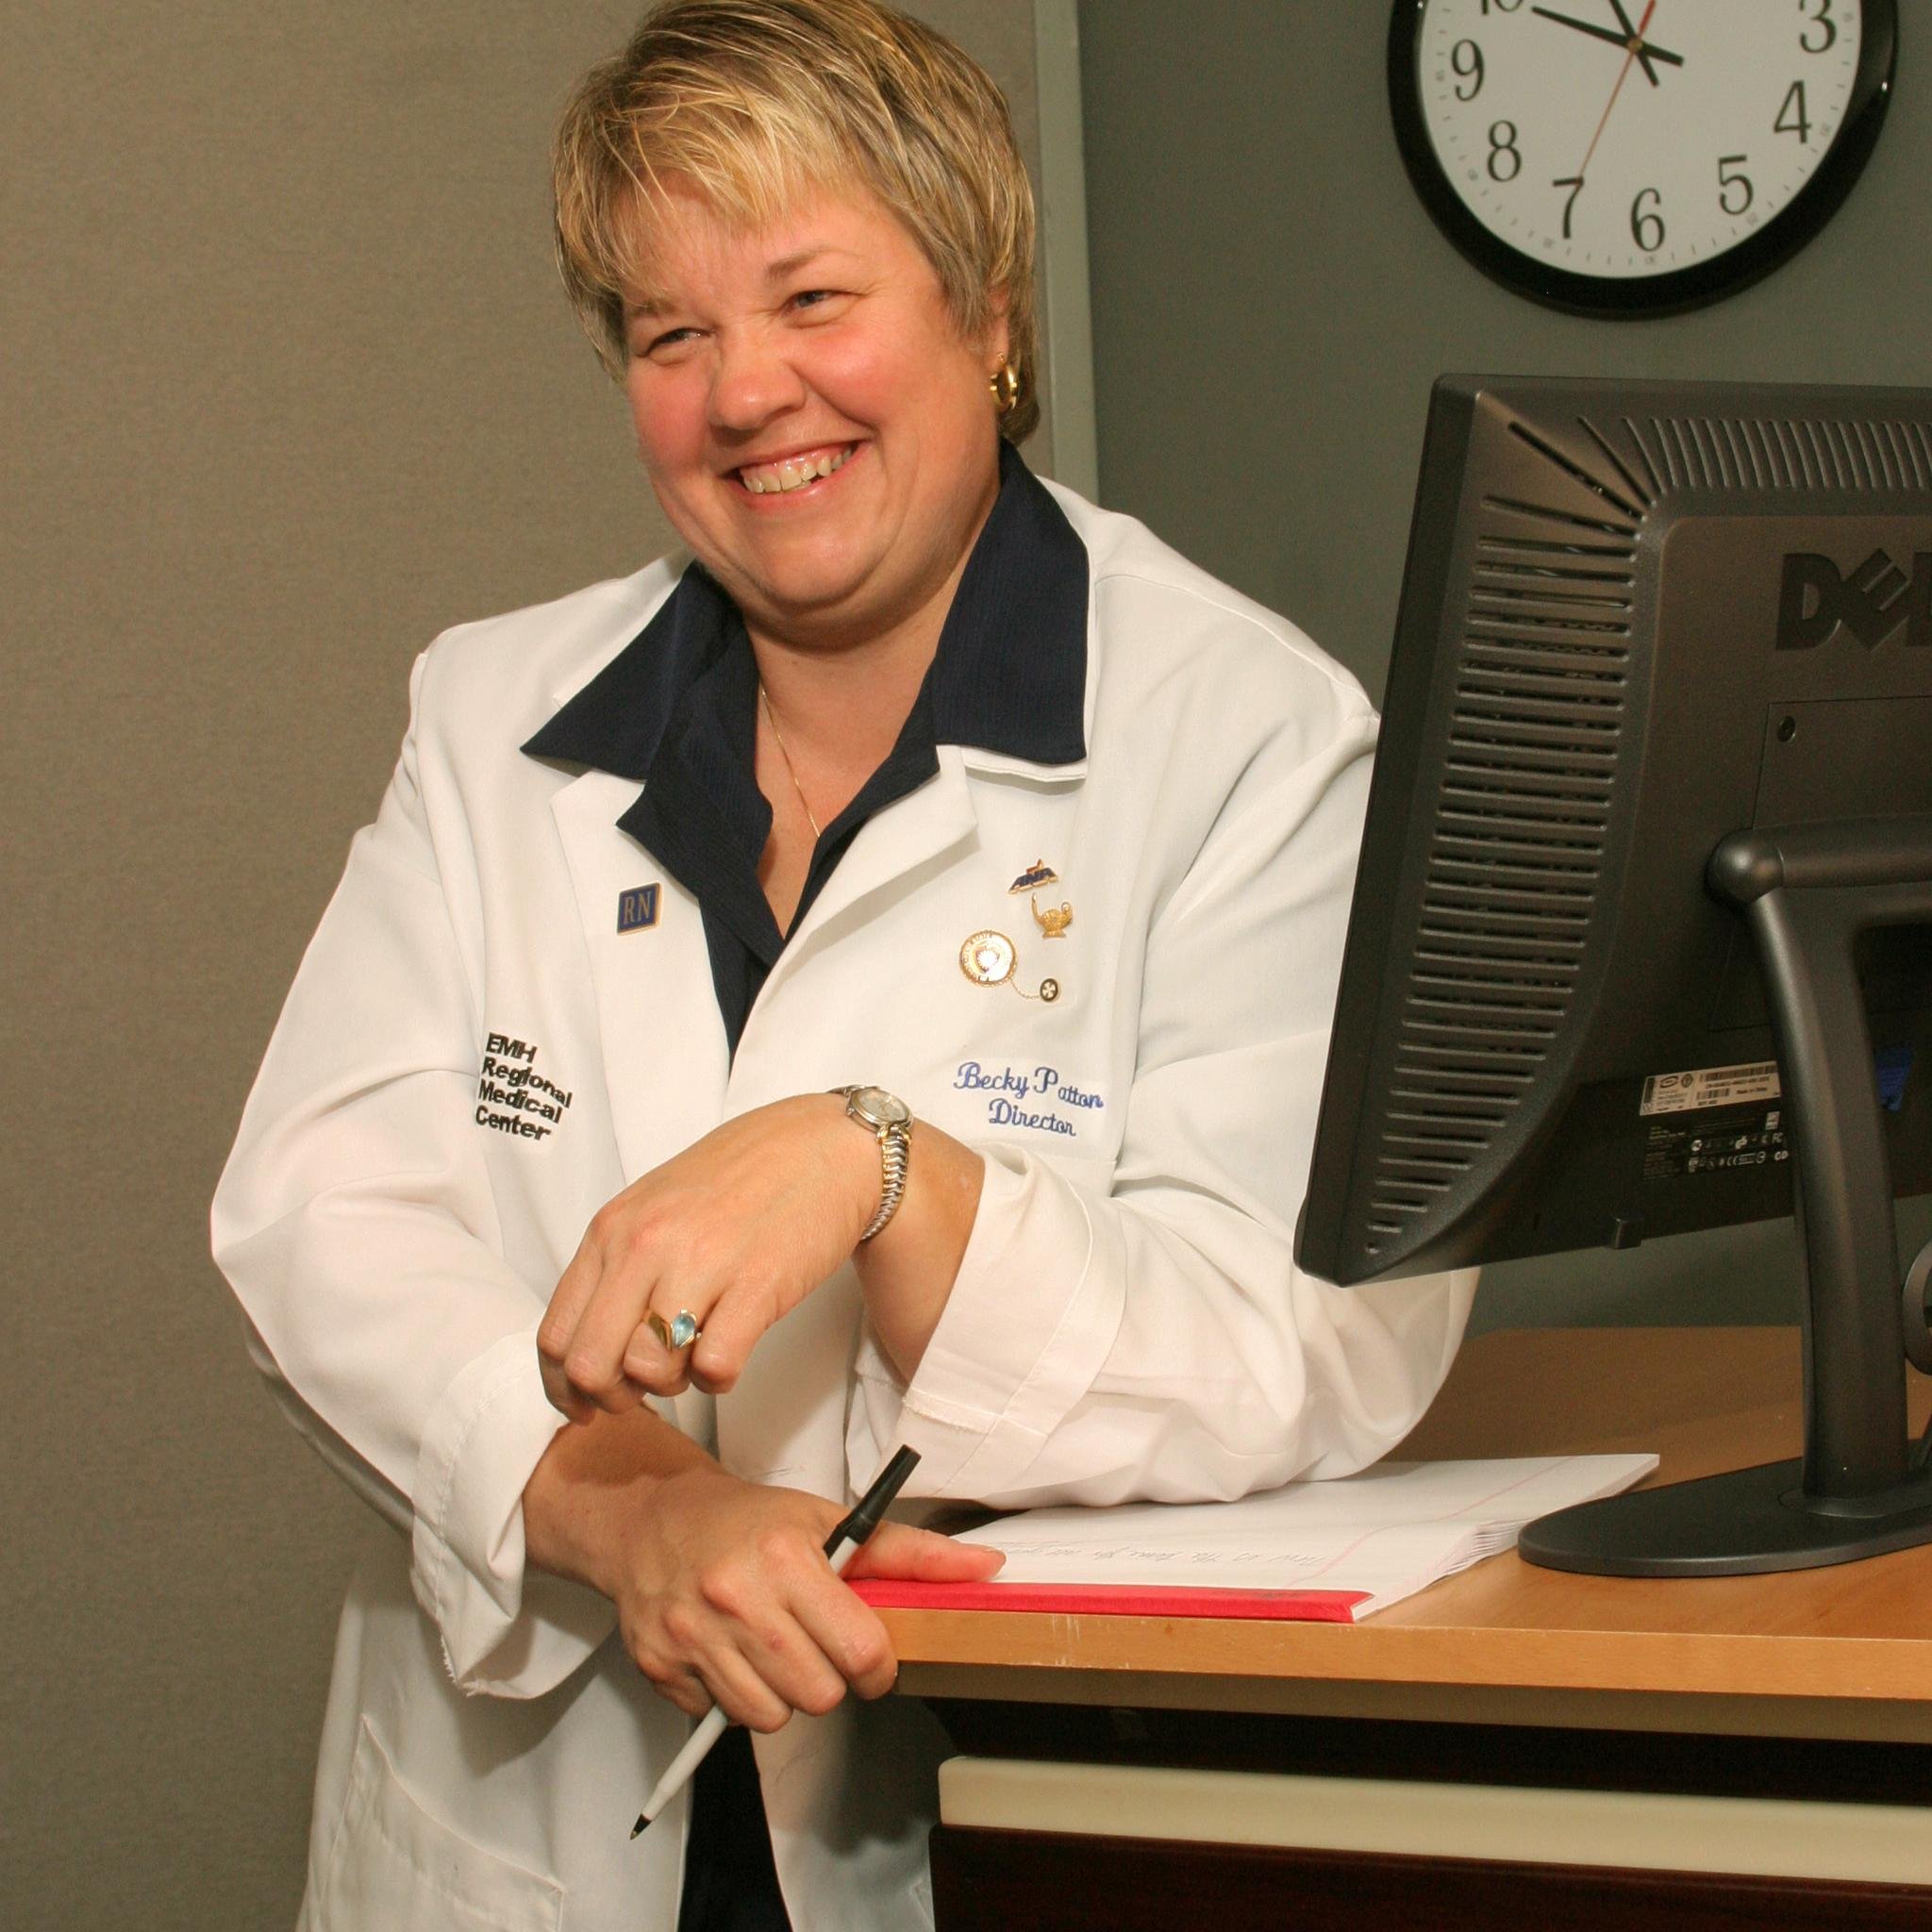 Lucy Jo Atkinson Professor in Perioperative Nursing
Case Western Reserve University